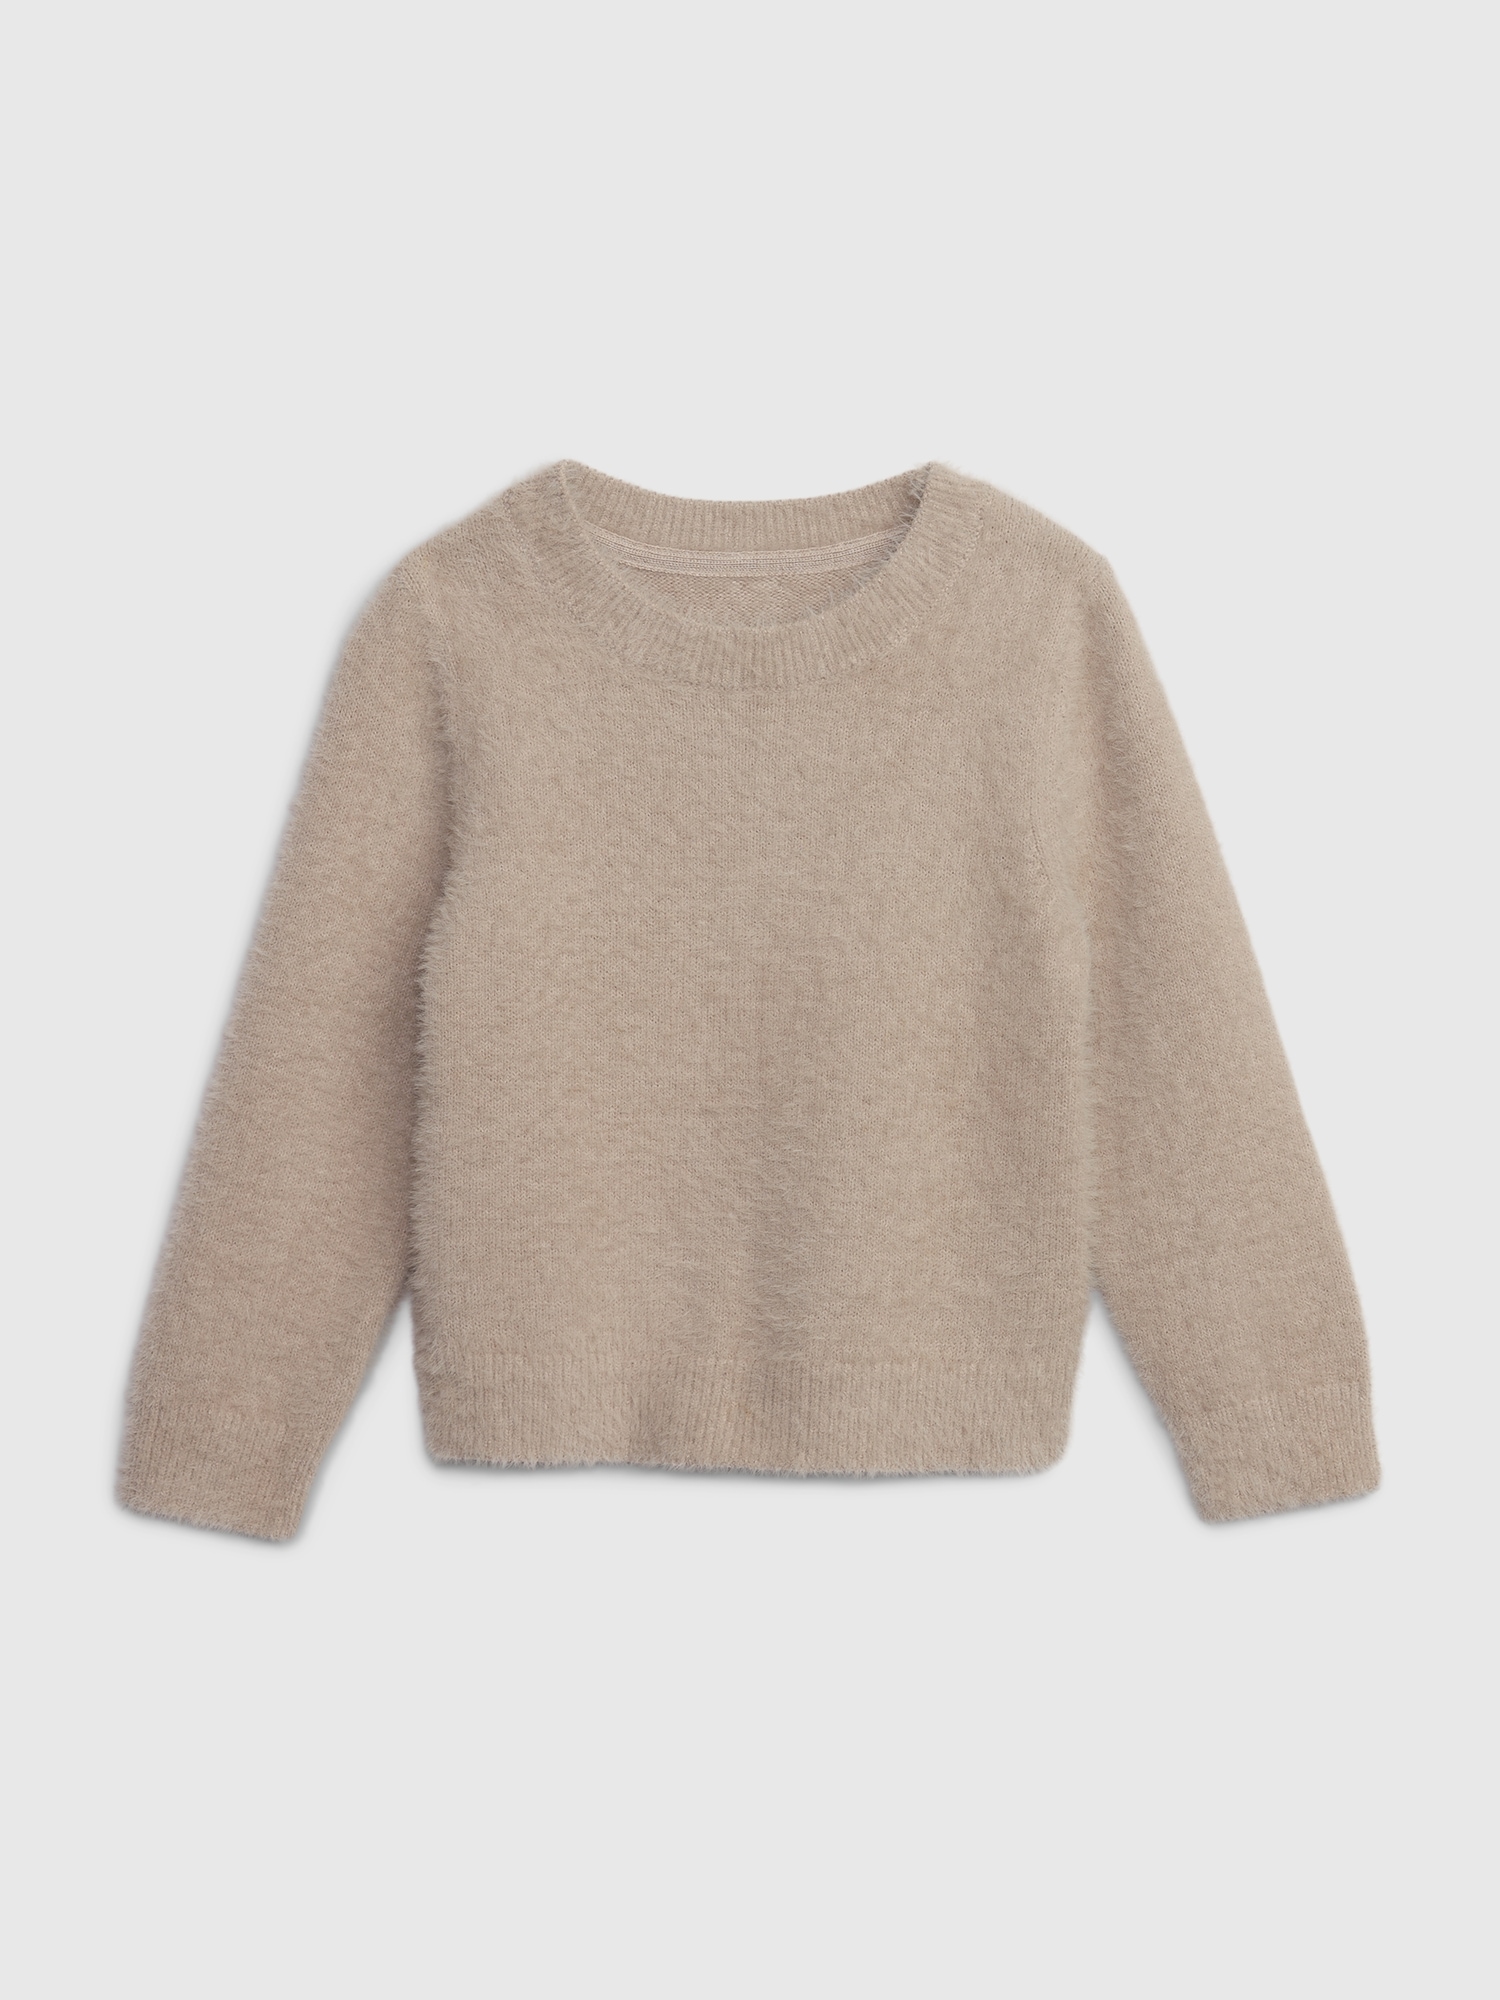 Gap Toddler Fuzzy Sweater